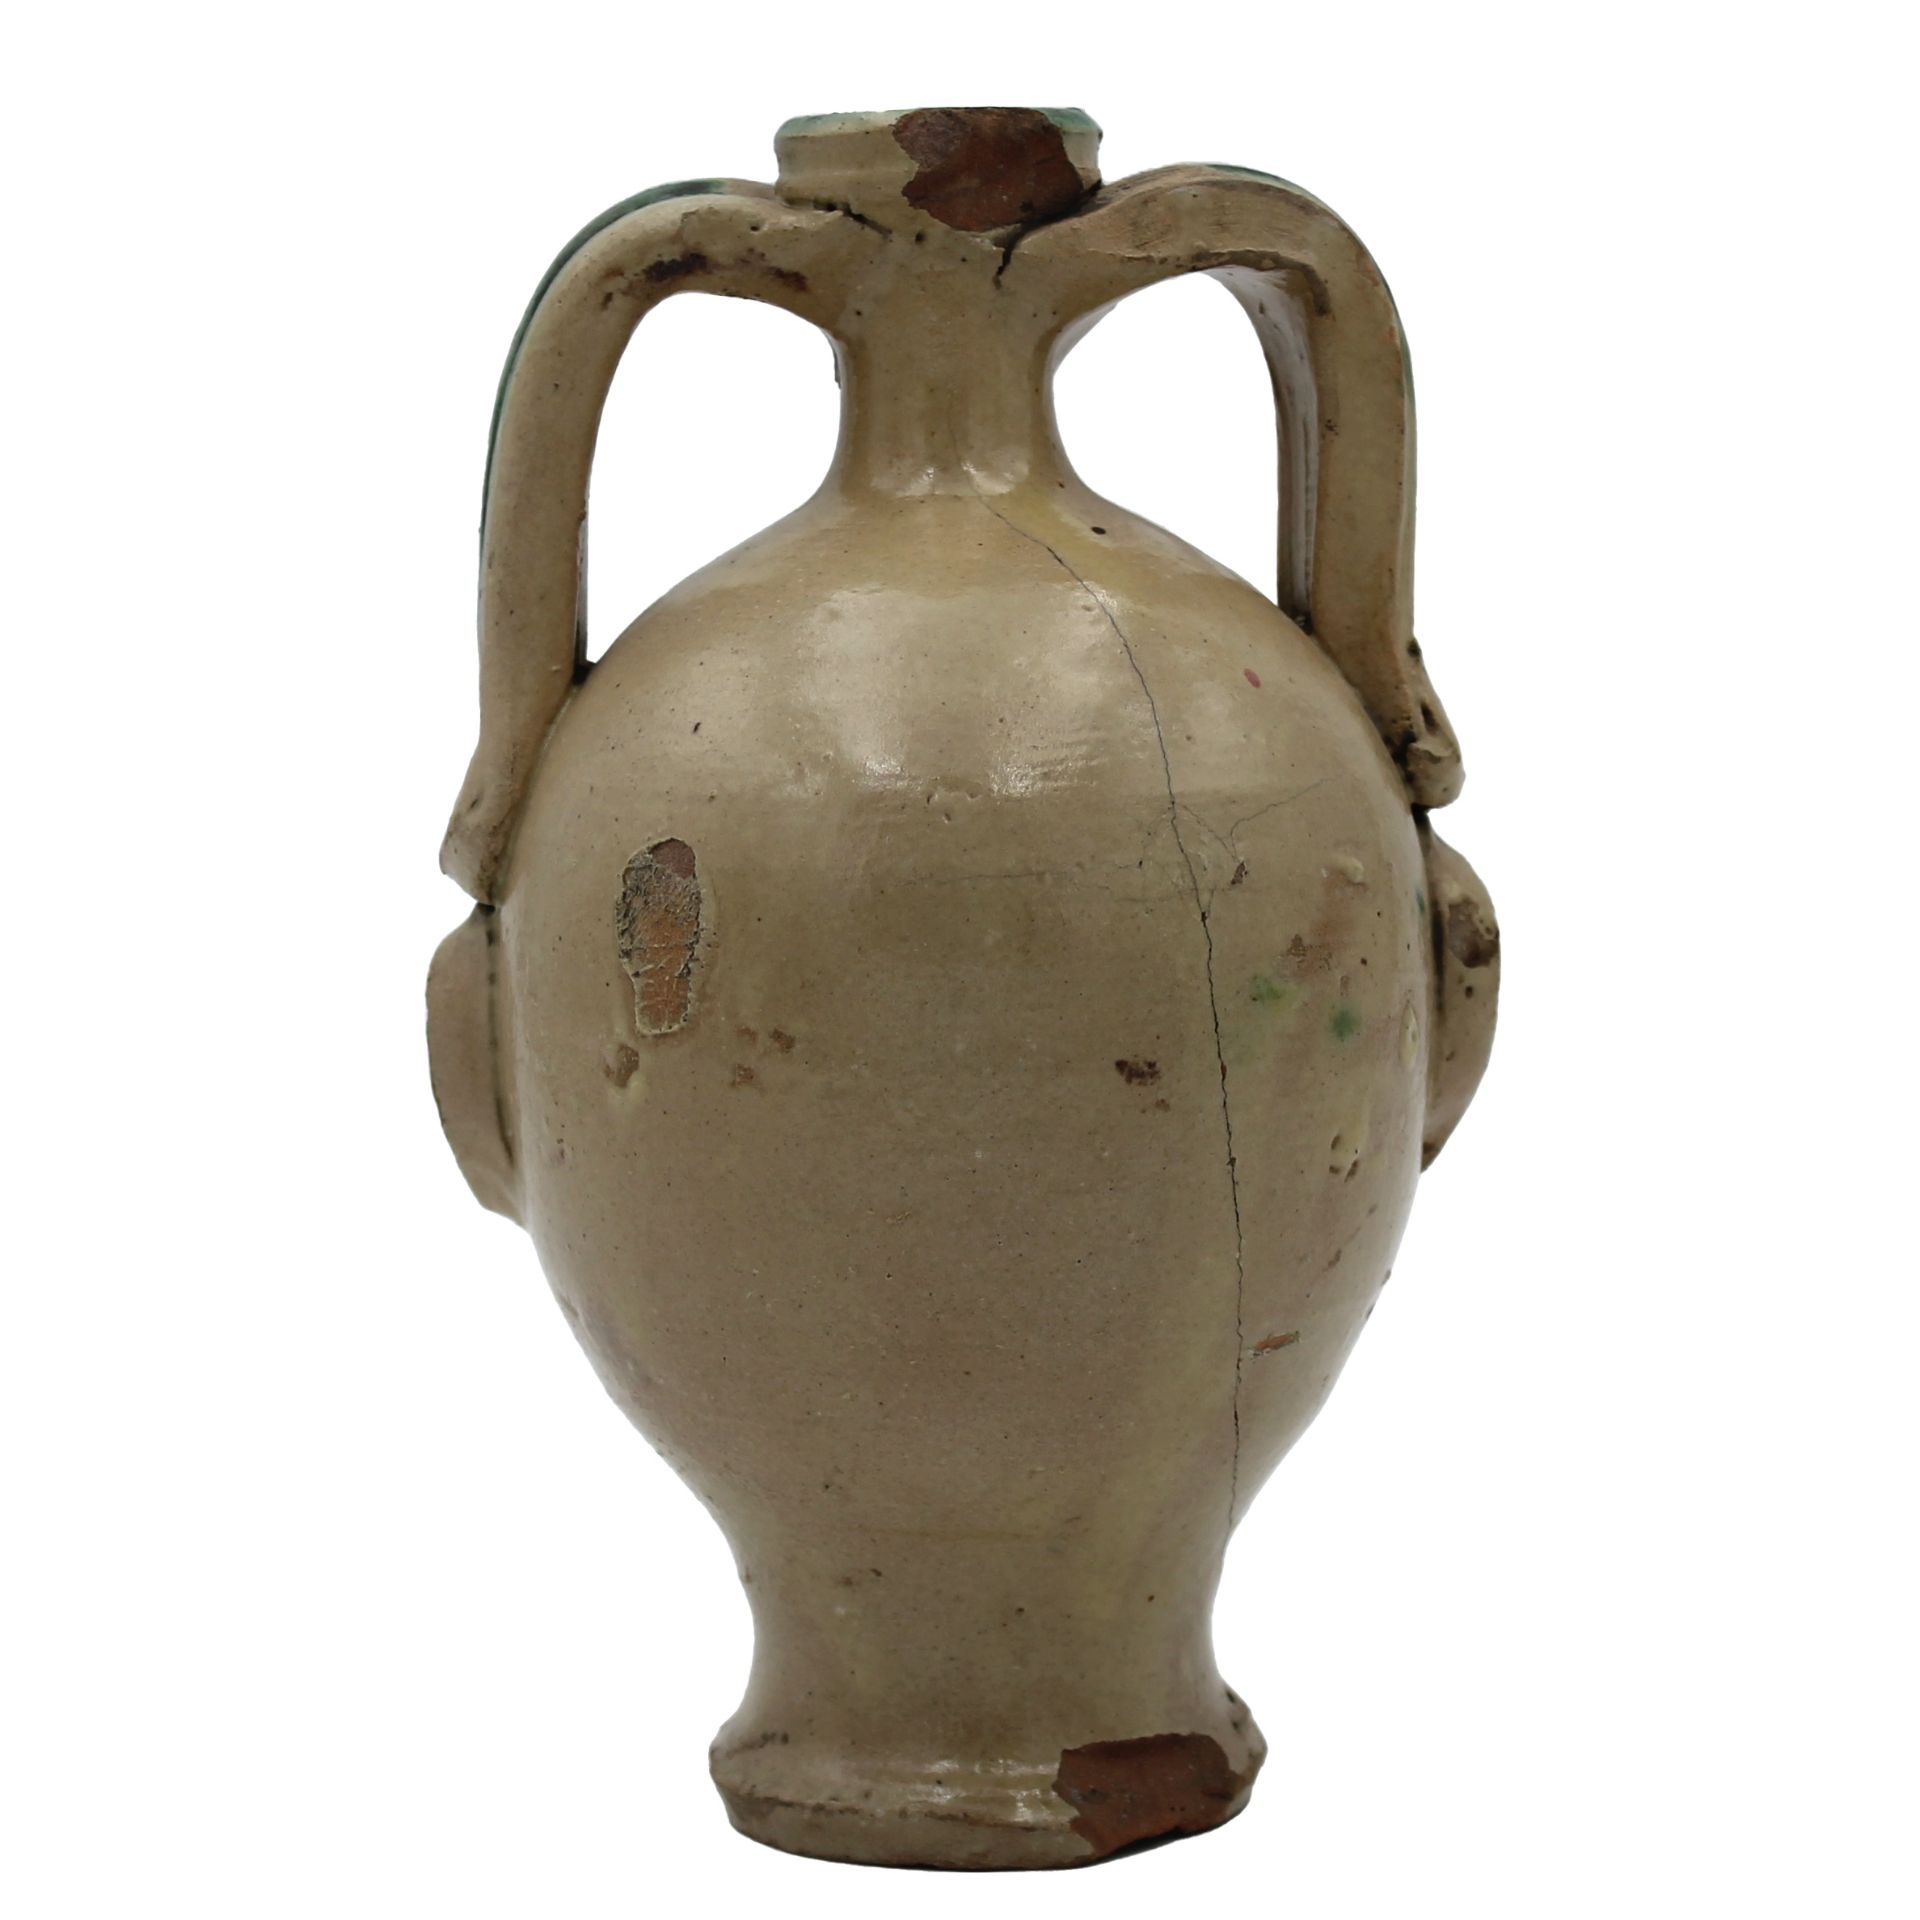 Piccola anfora antropomorfa - Small anthropomorphic amphora - Image 2 of 2